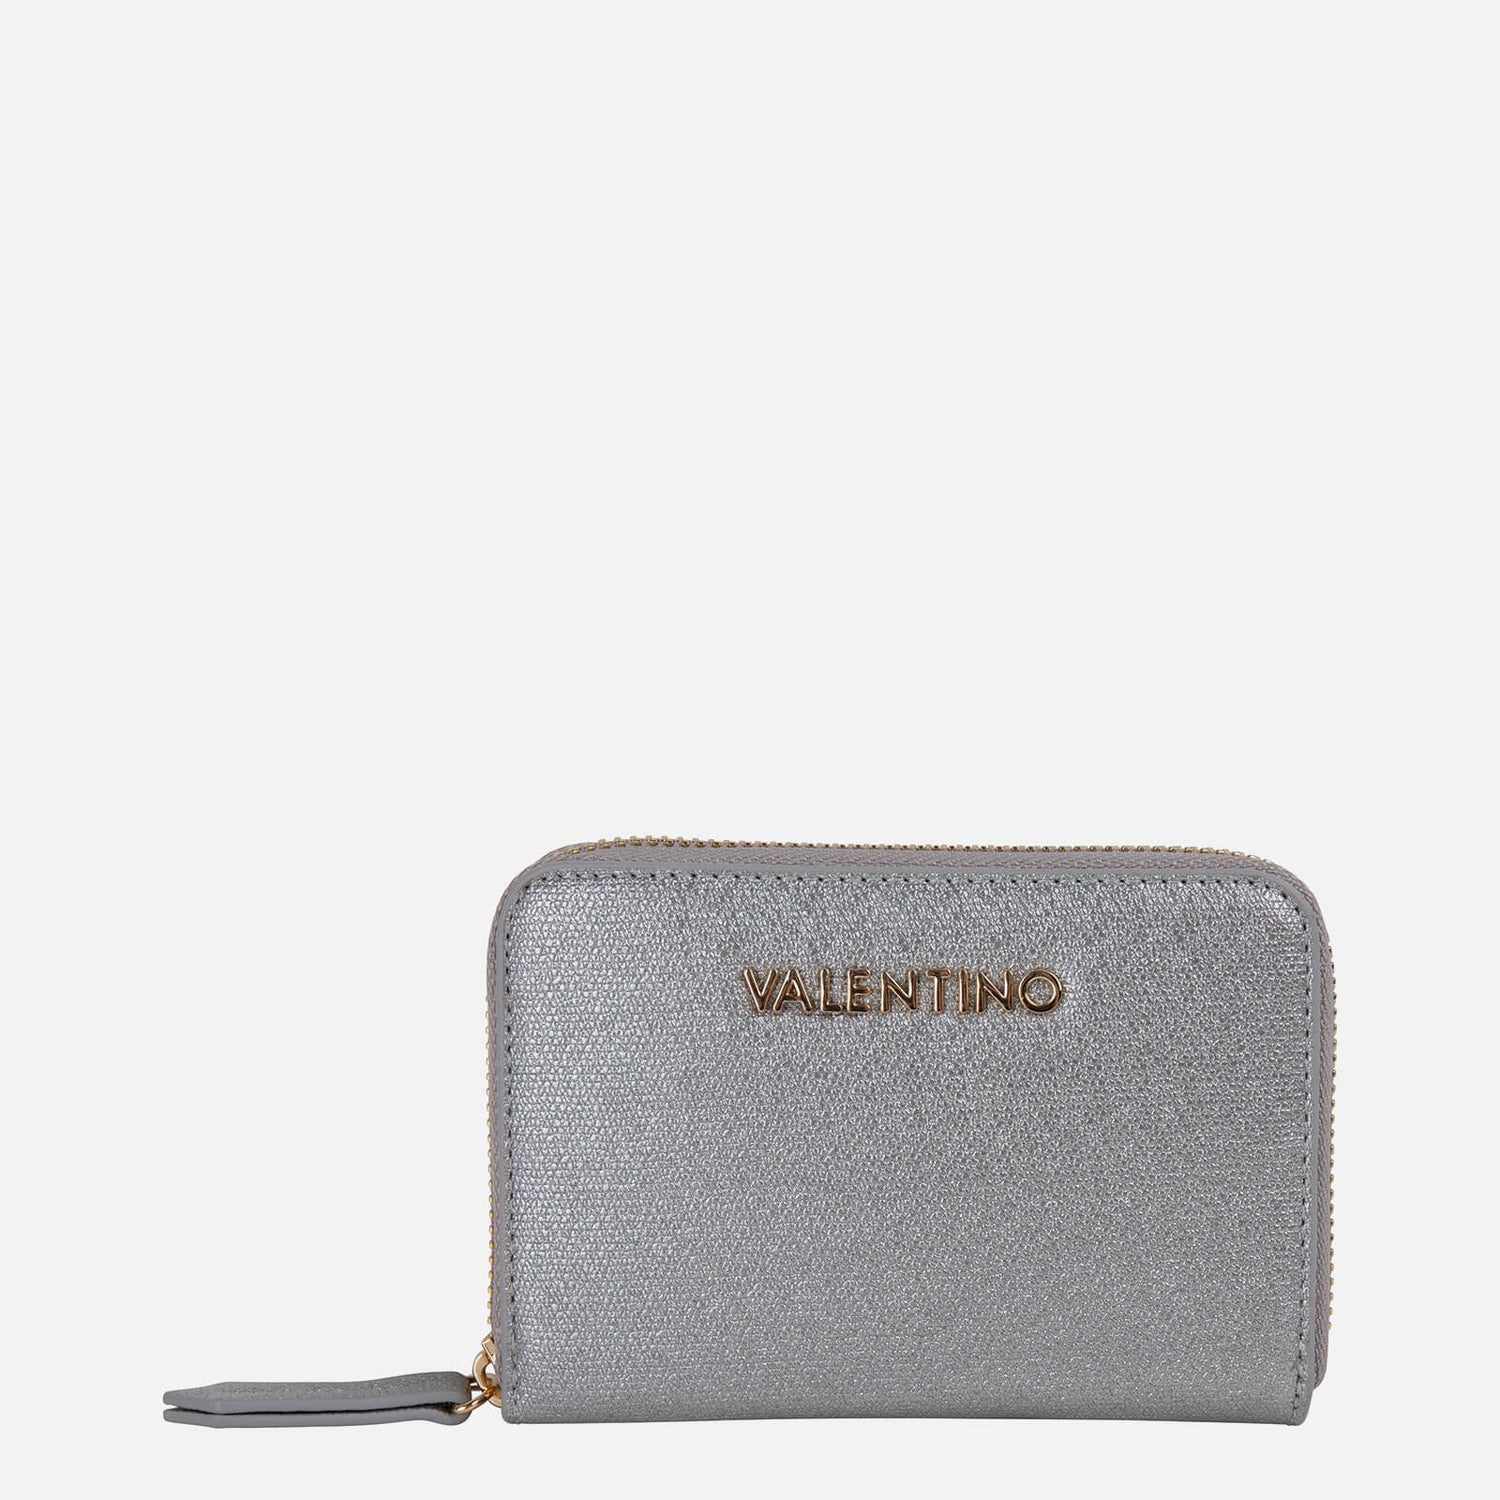 Valentino Bags Zenzero Mirror and Wallet